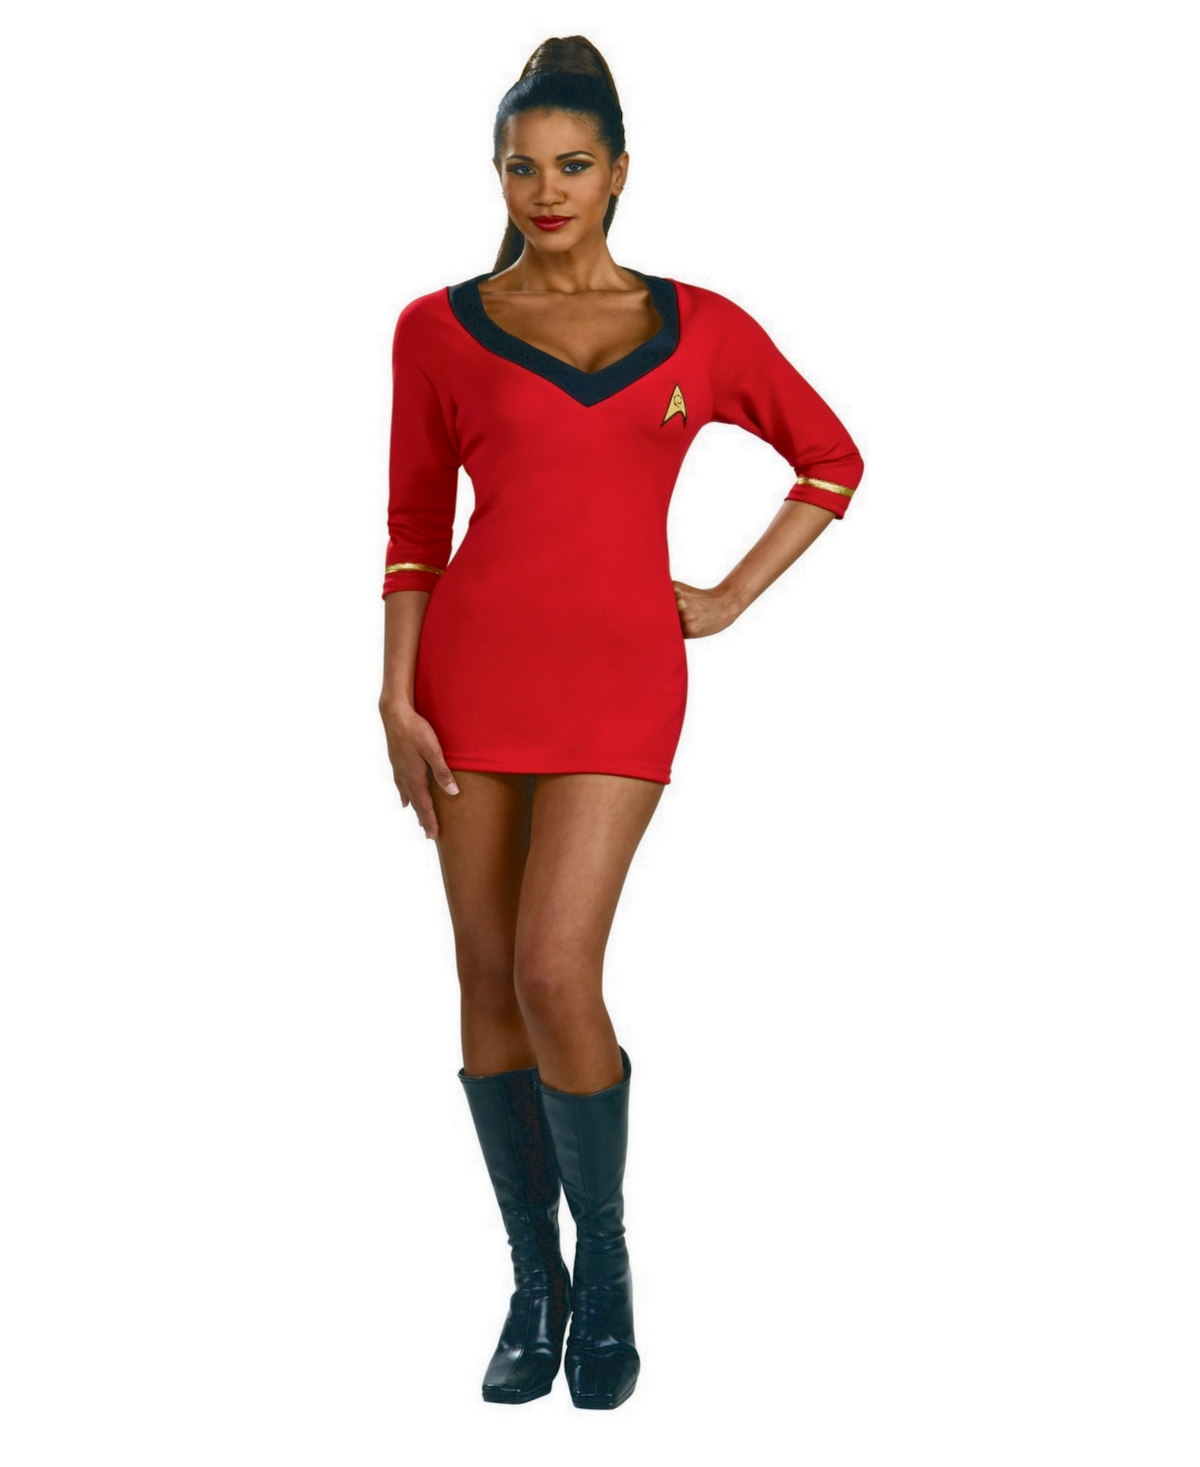 BuySeason Women's Star Trek Secret Wishes Dress Costume - Red